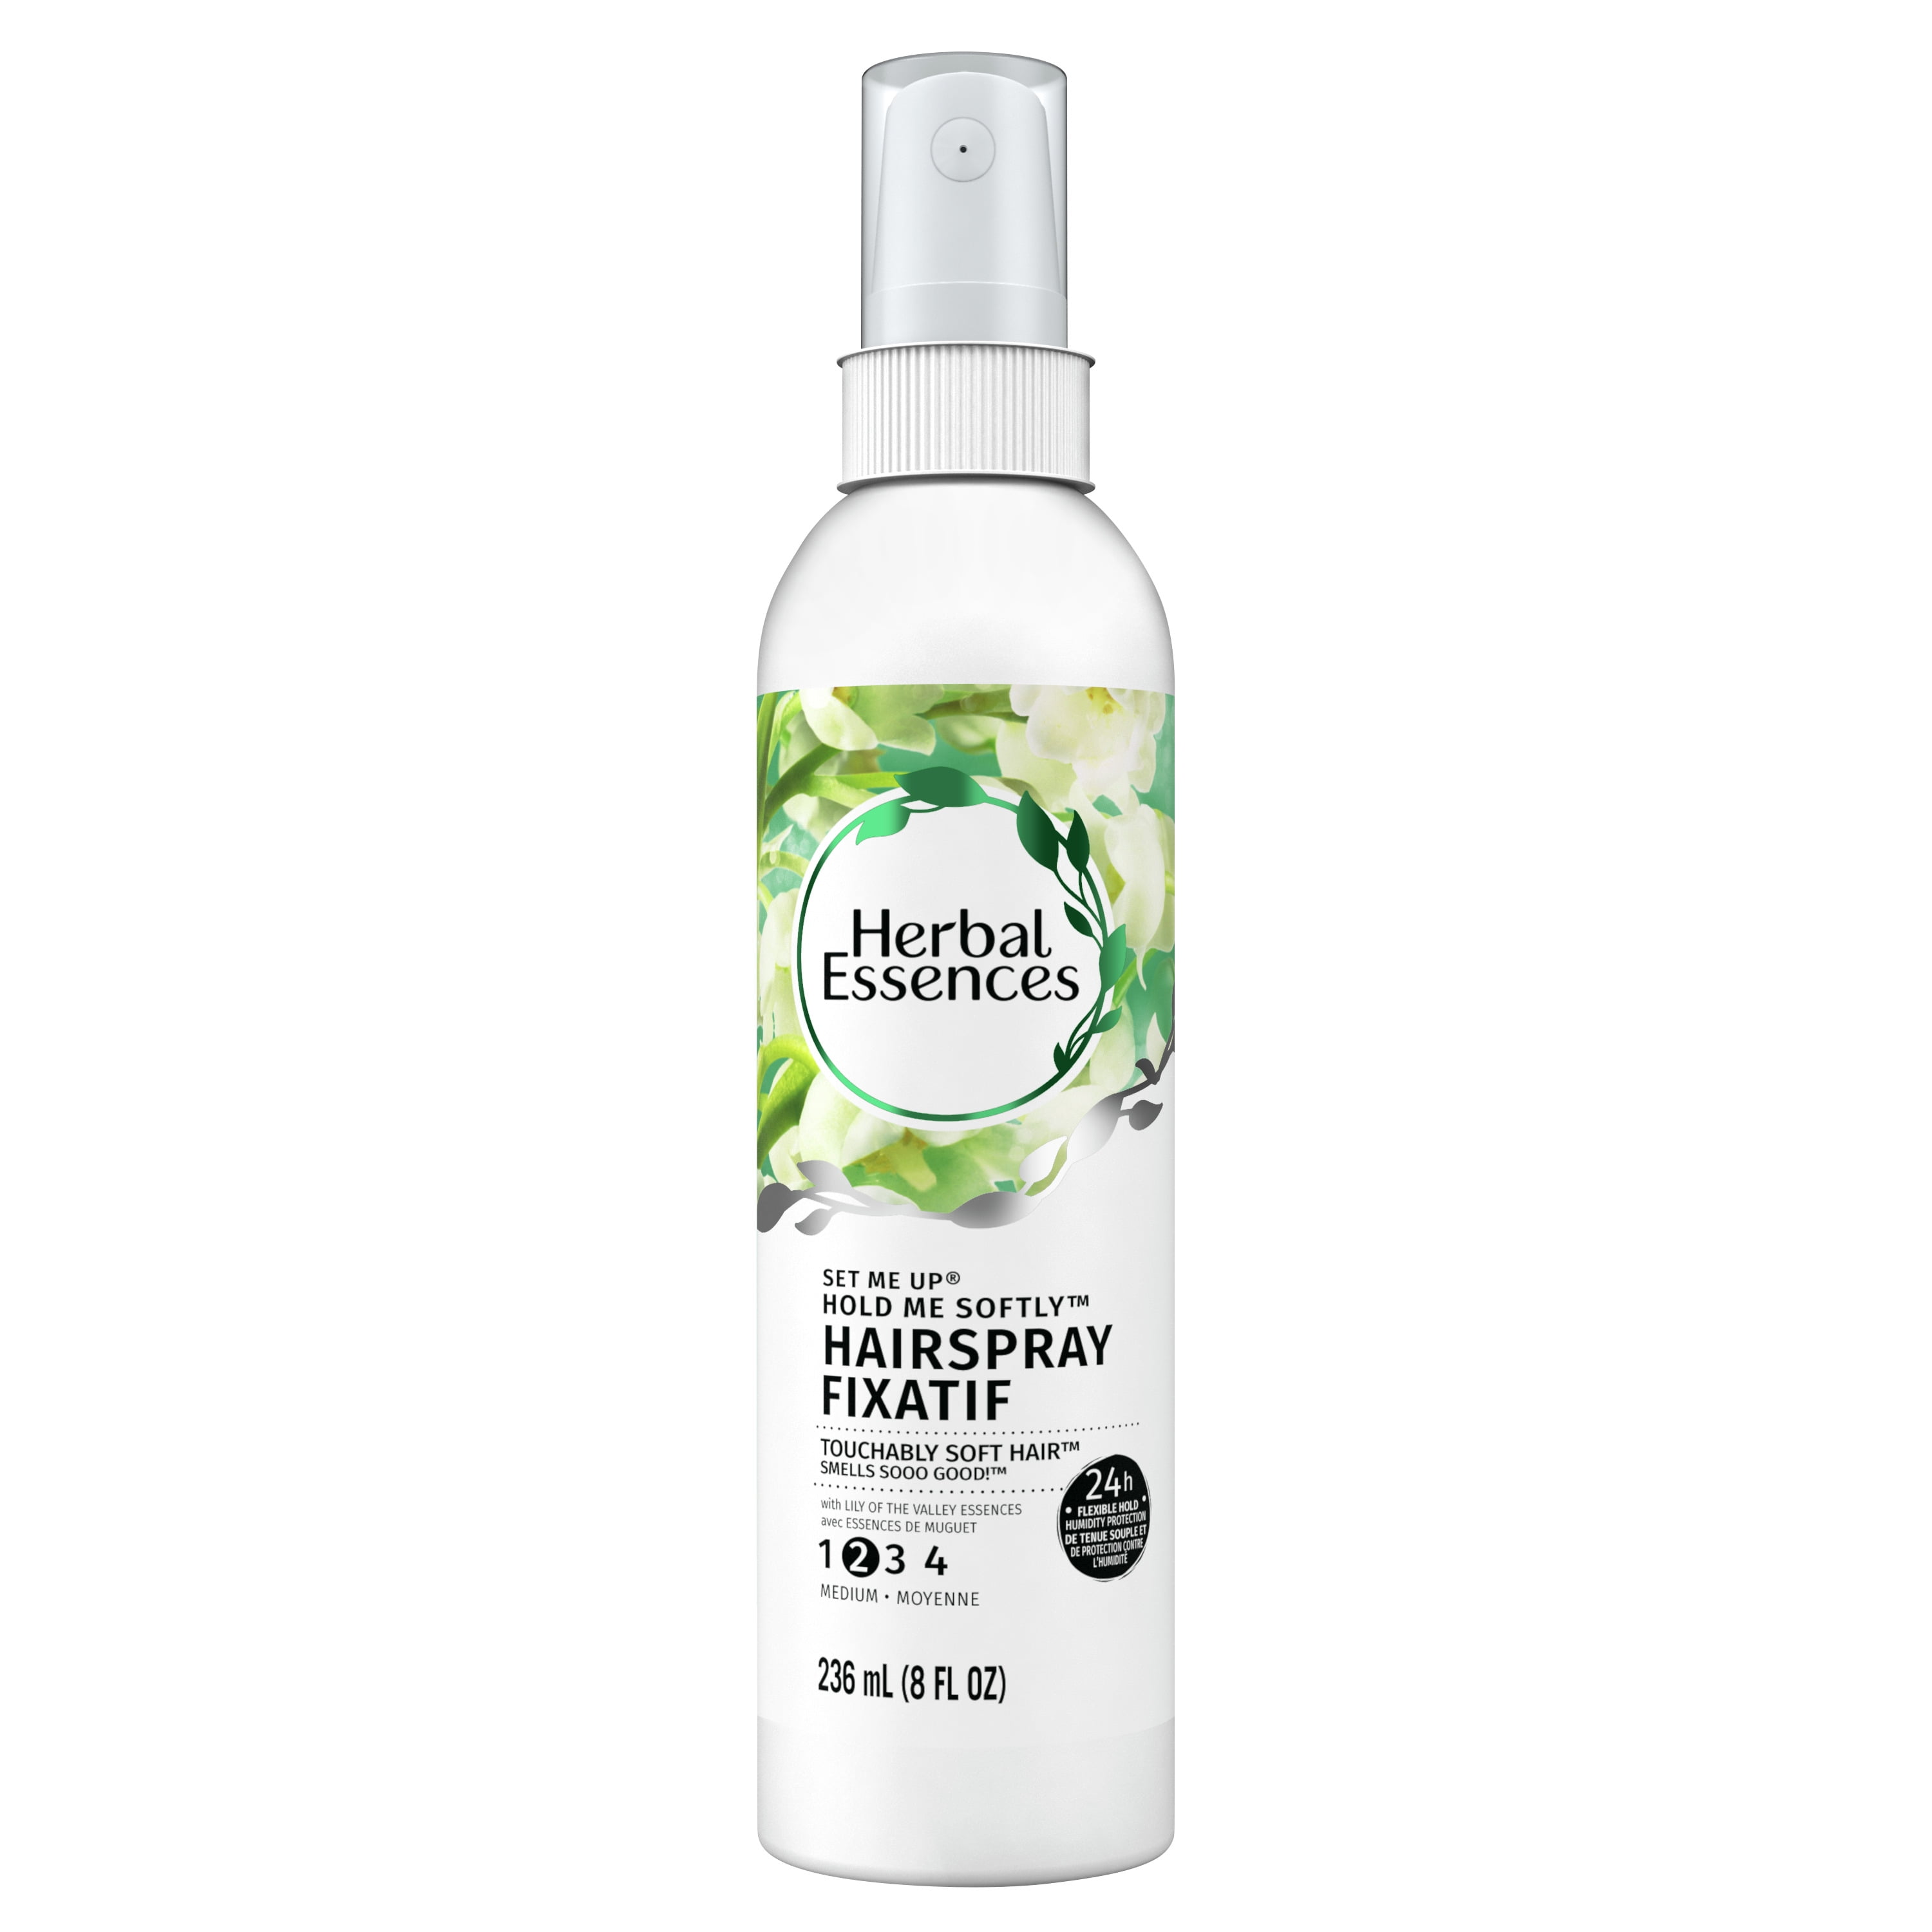 Herbal Essences Flexible Hairspray, 24 Hour Hold, 8 fl oz